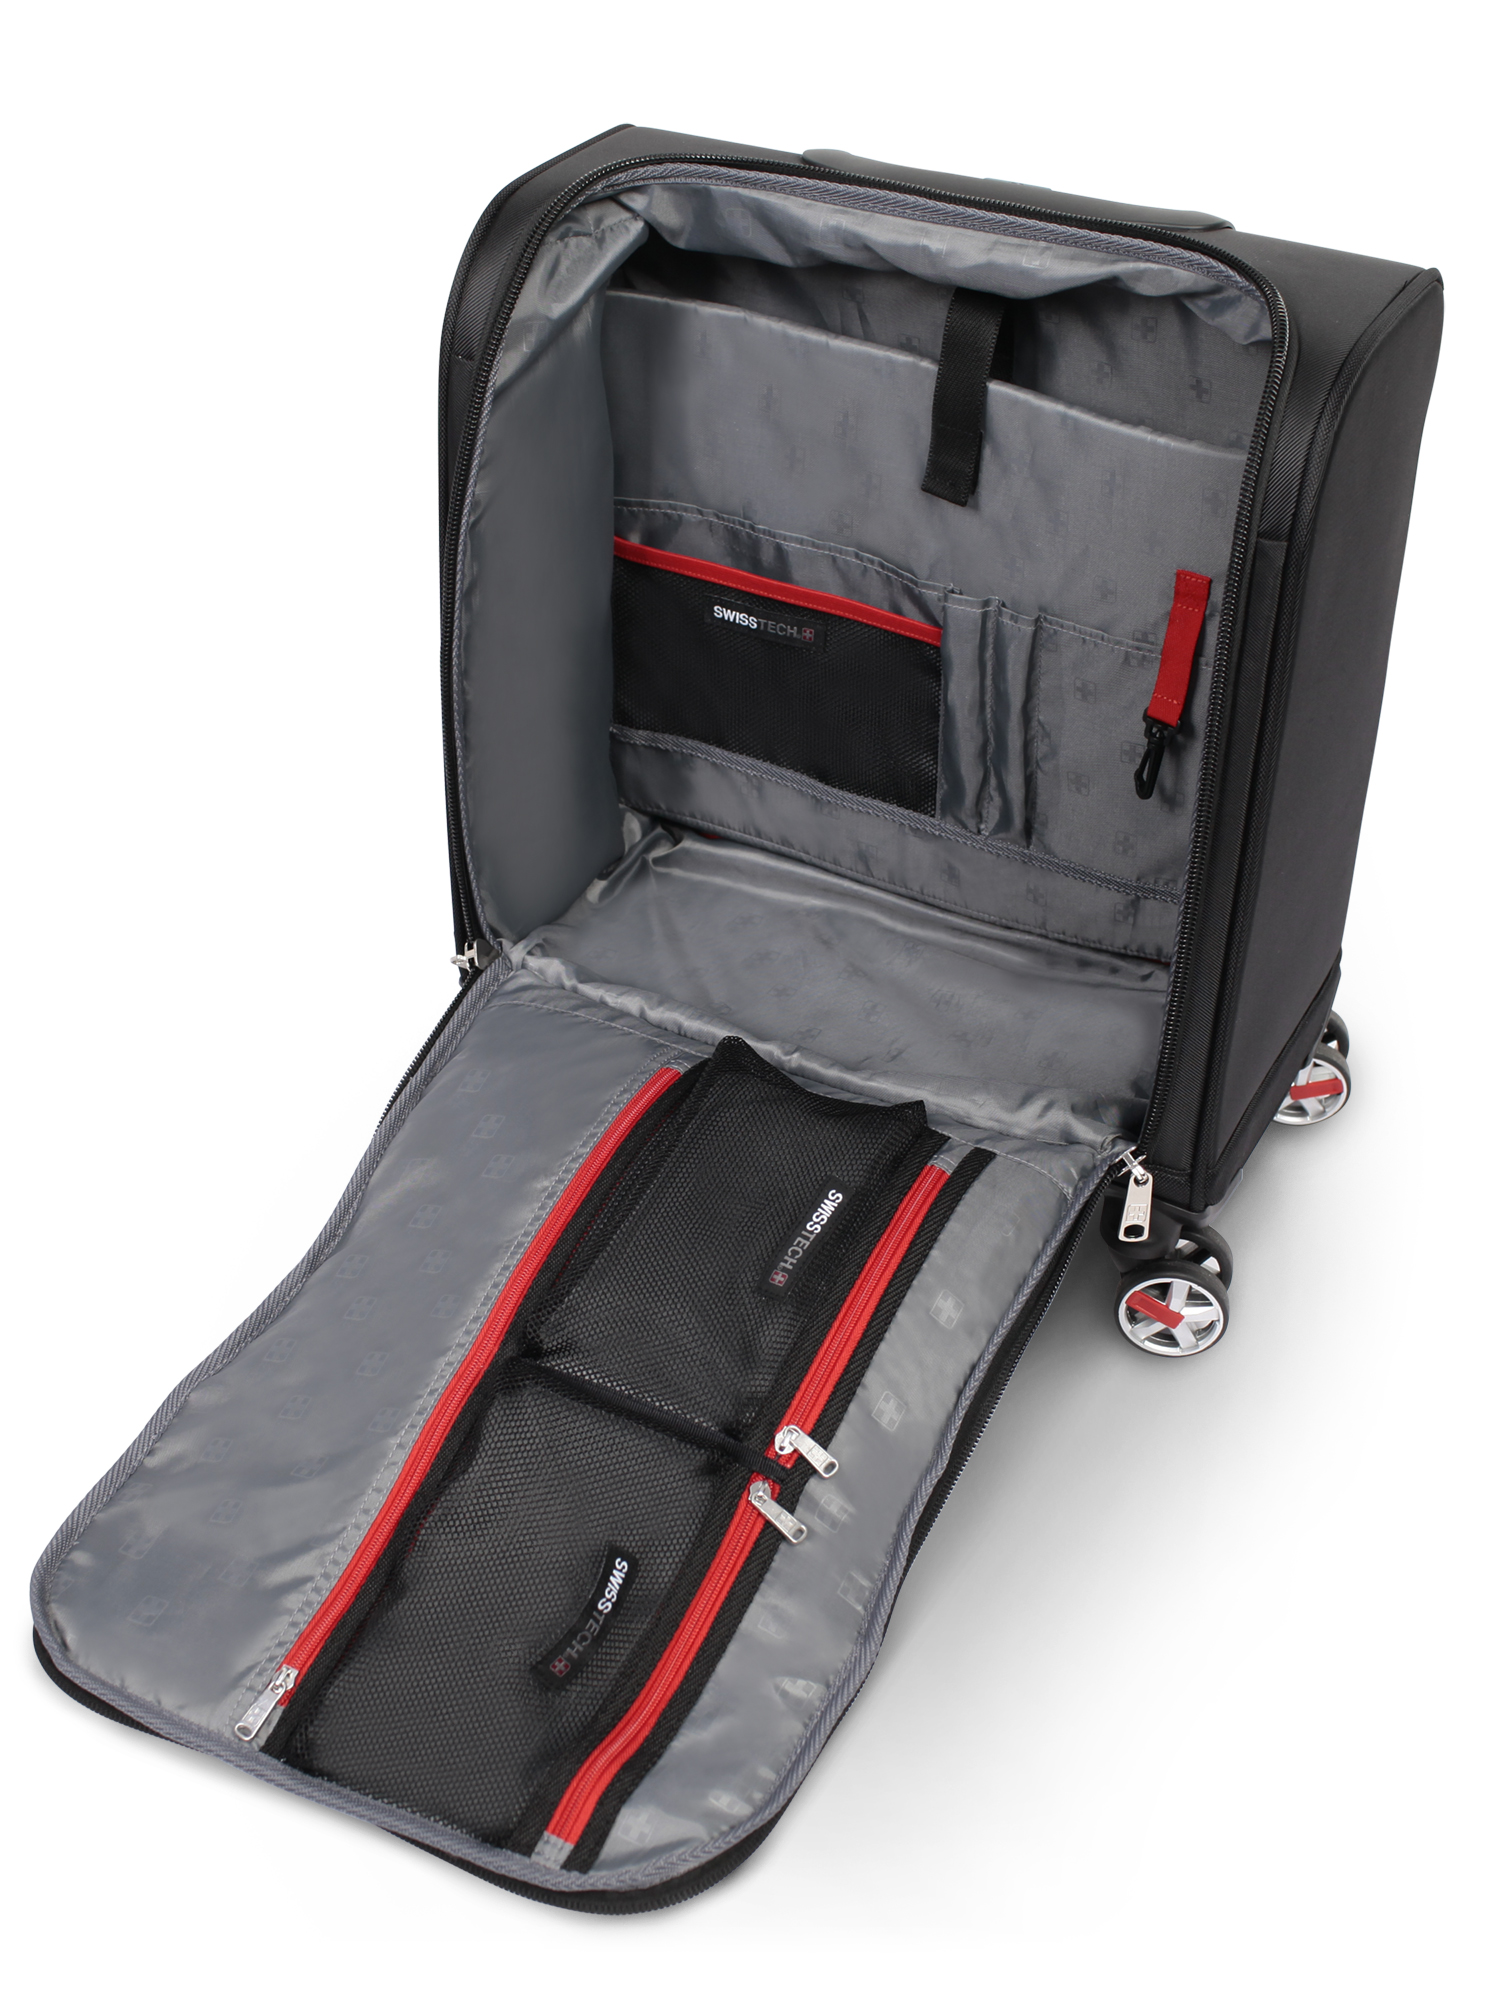 SwissTech Executive 16.5" Carry-on Luggage, 8-Wheel Underseater, Black (Walmart Exclusive) - image 3 of 9